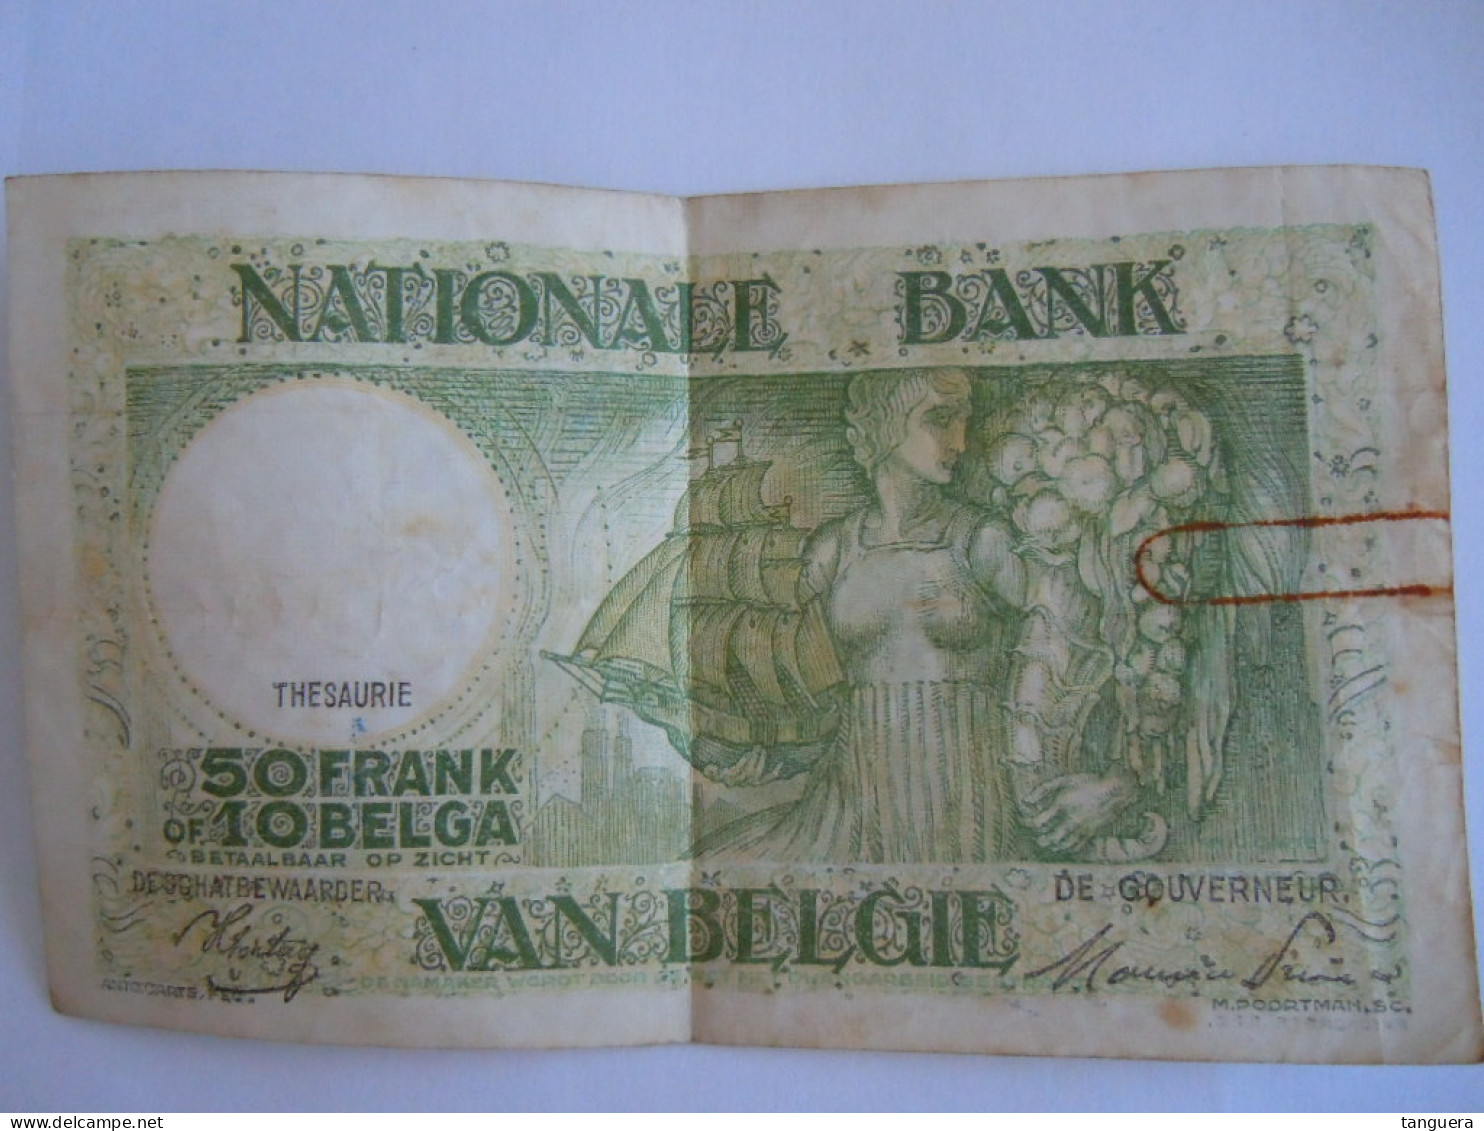 Belgie Vijf Frank Of 10 Belga Belgique 50 Francs Ou 10 Belga 13-11-44 5479A0857 P106 Zie Foto's  Voire Photo - 50 Francs-10 Belgas